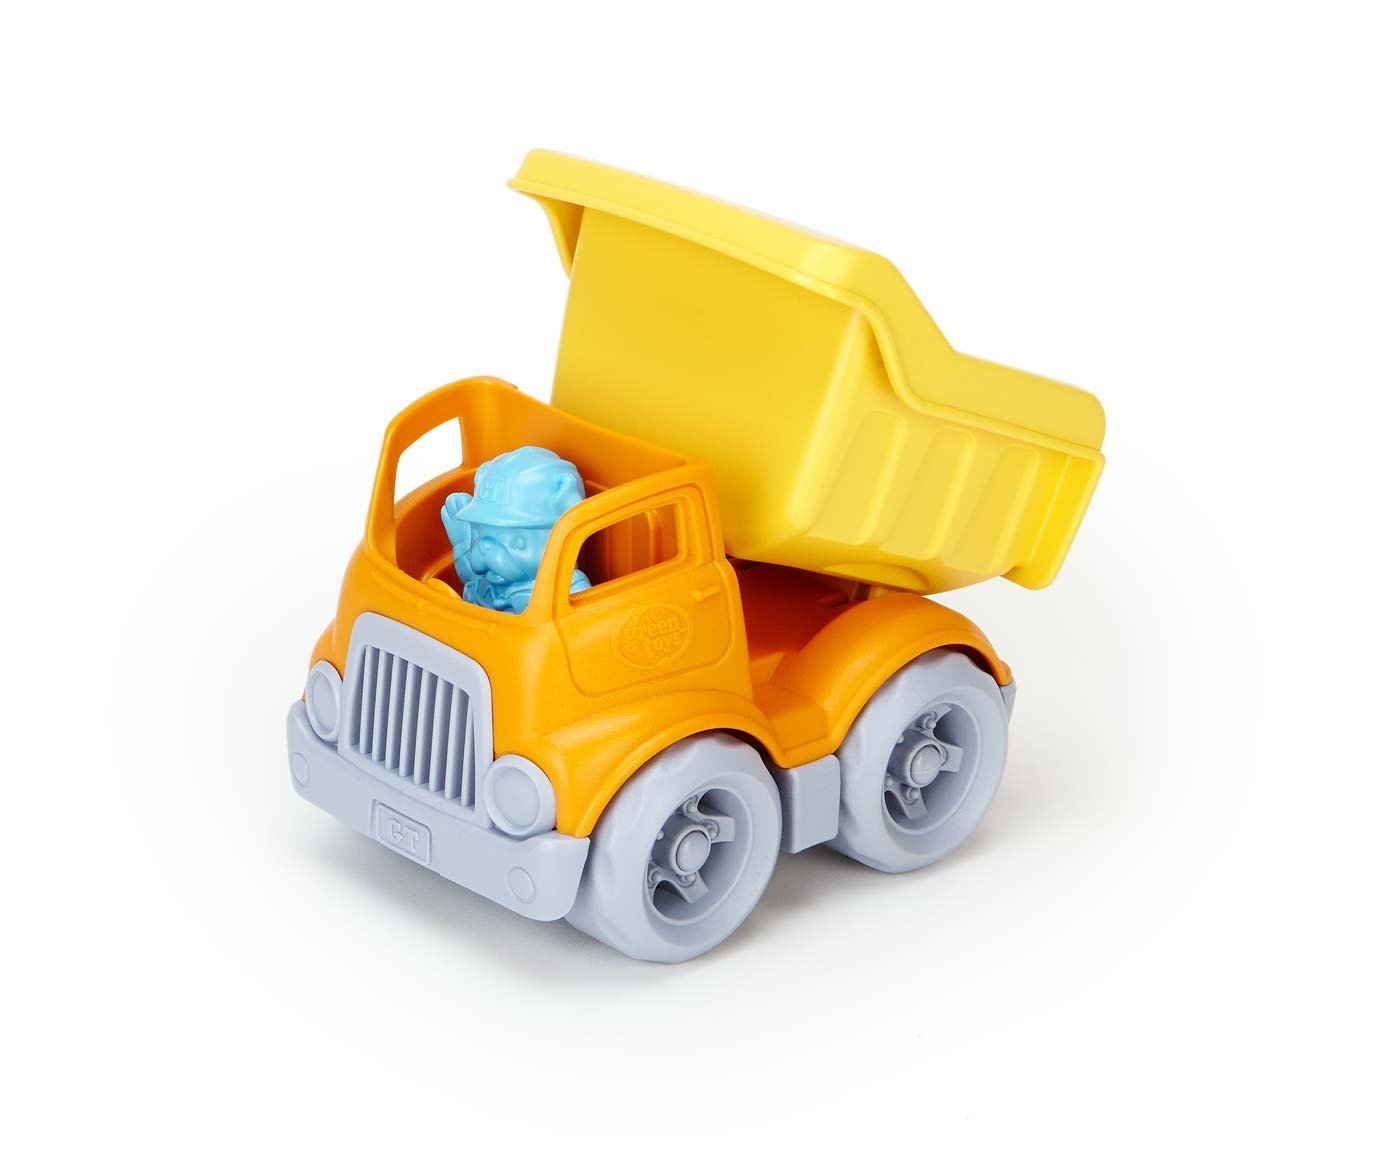 Green Toys Construction Truck - Dumper